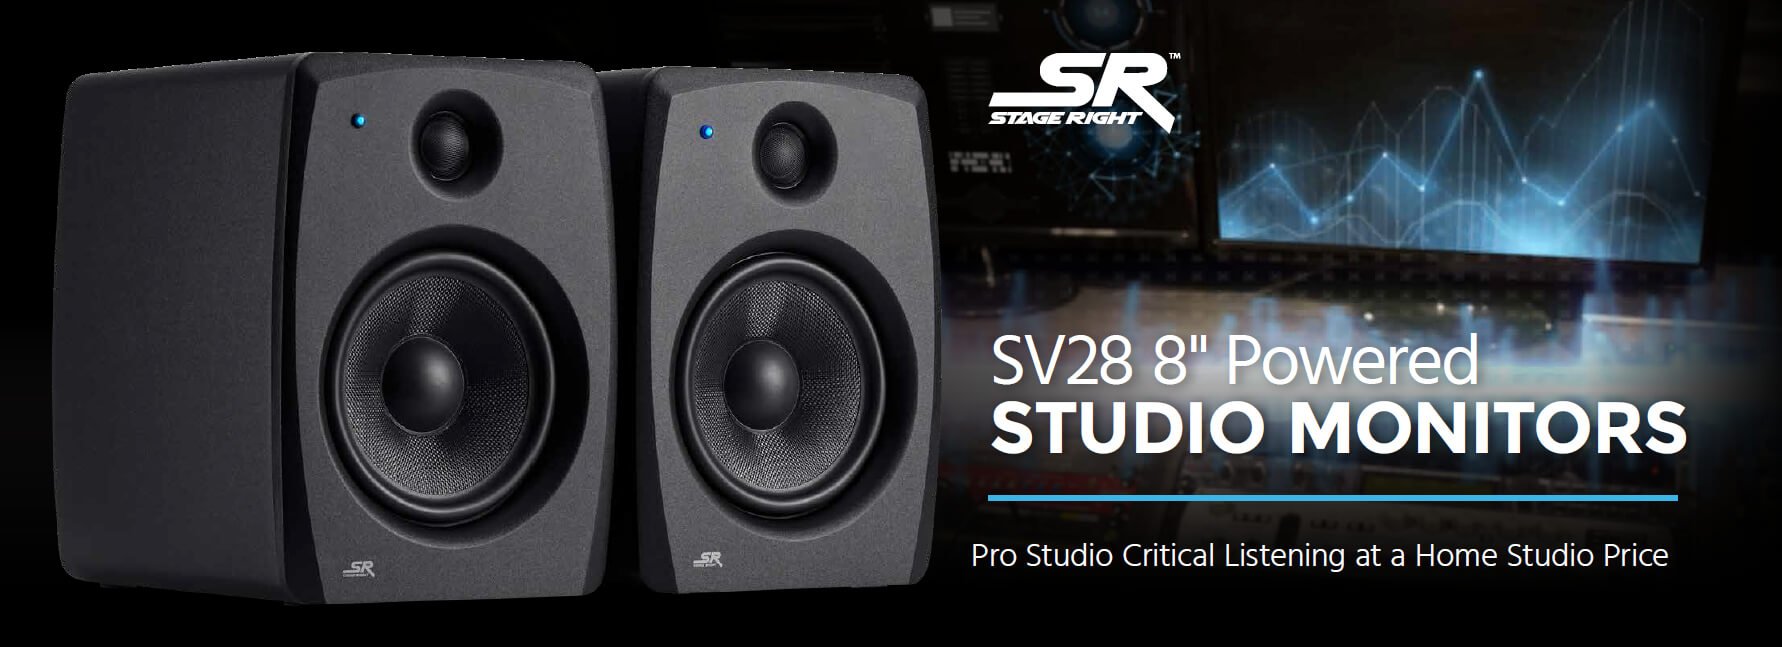 SV28 Studio Monitors